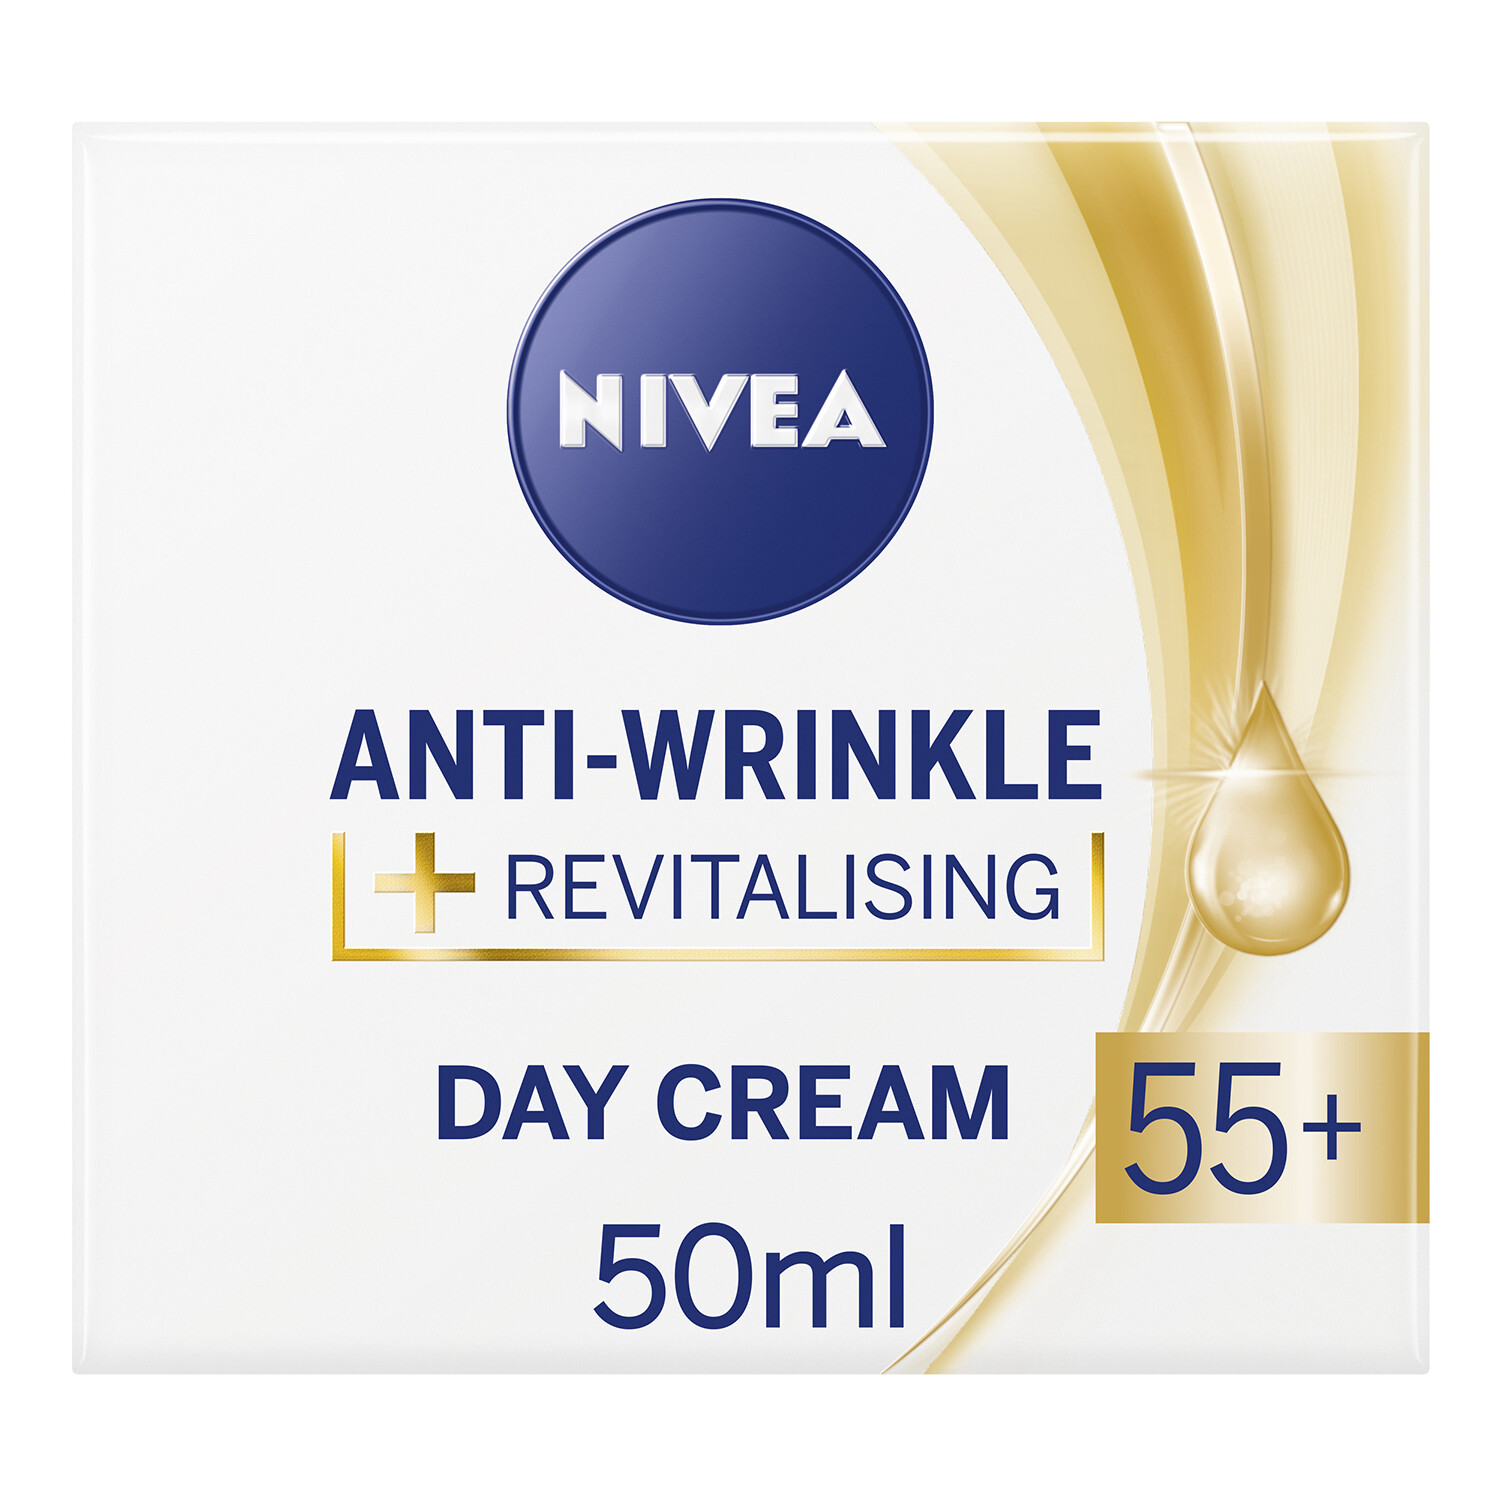 Nivea Anti-Wrinkle and Revitalising Day Cream Image